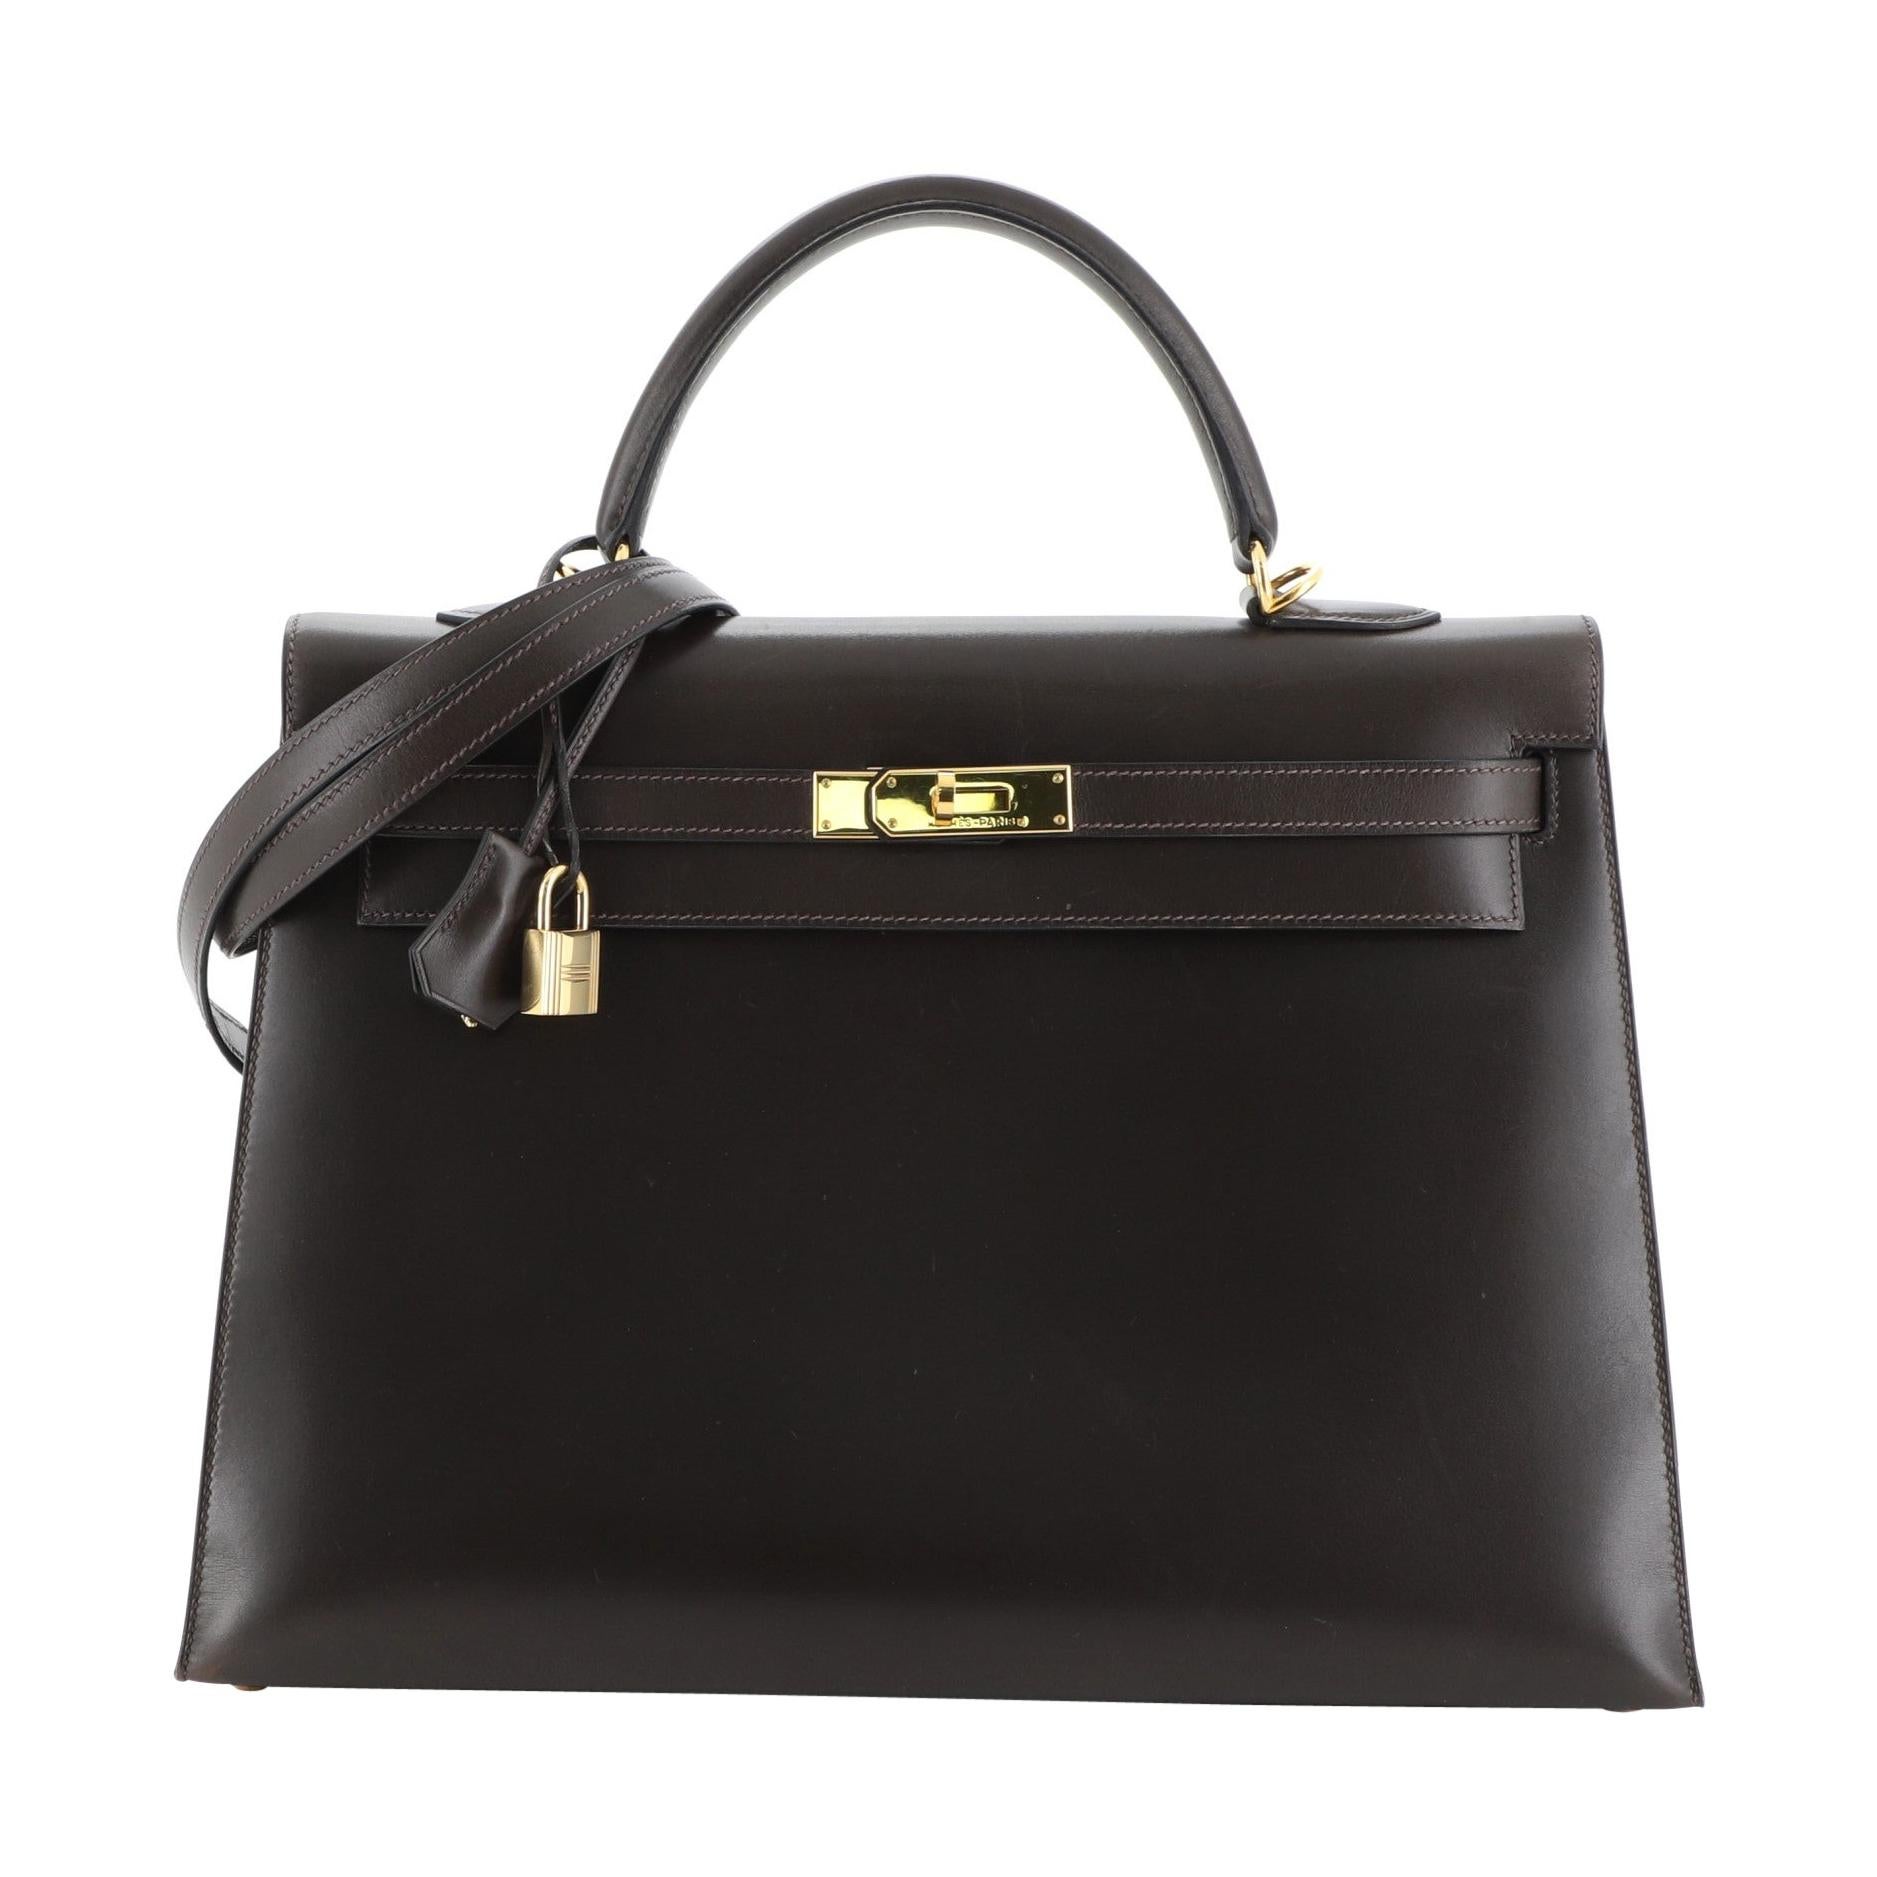 Hermes Kelly Handbag Marron Fonce Box Calf With Gold Hardware 35 